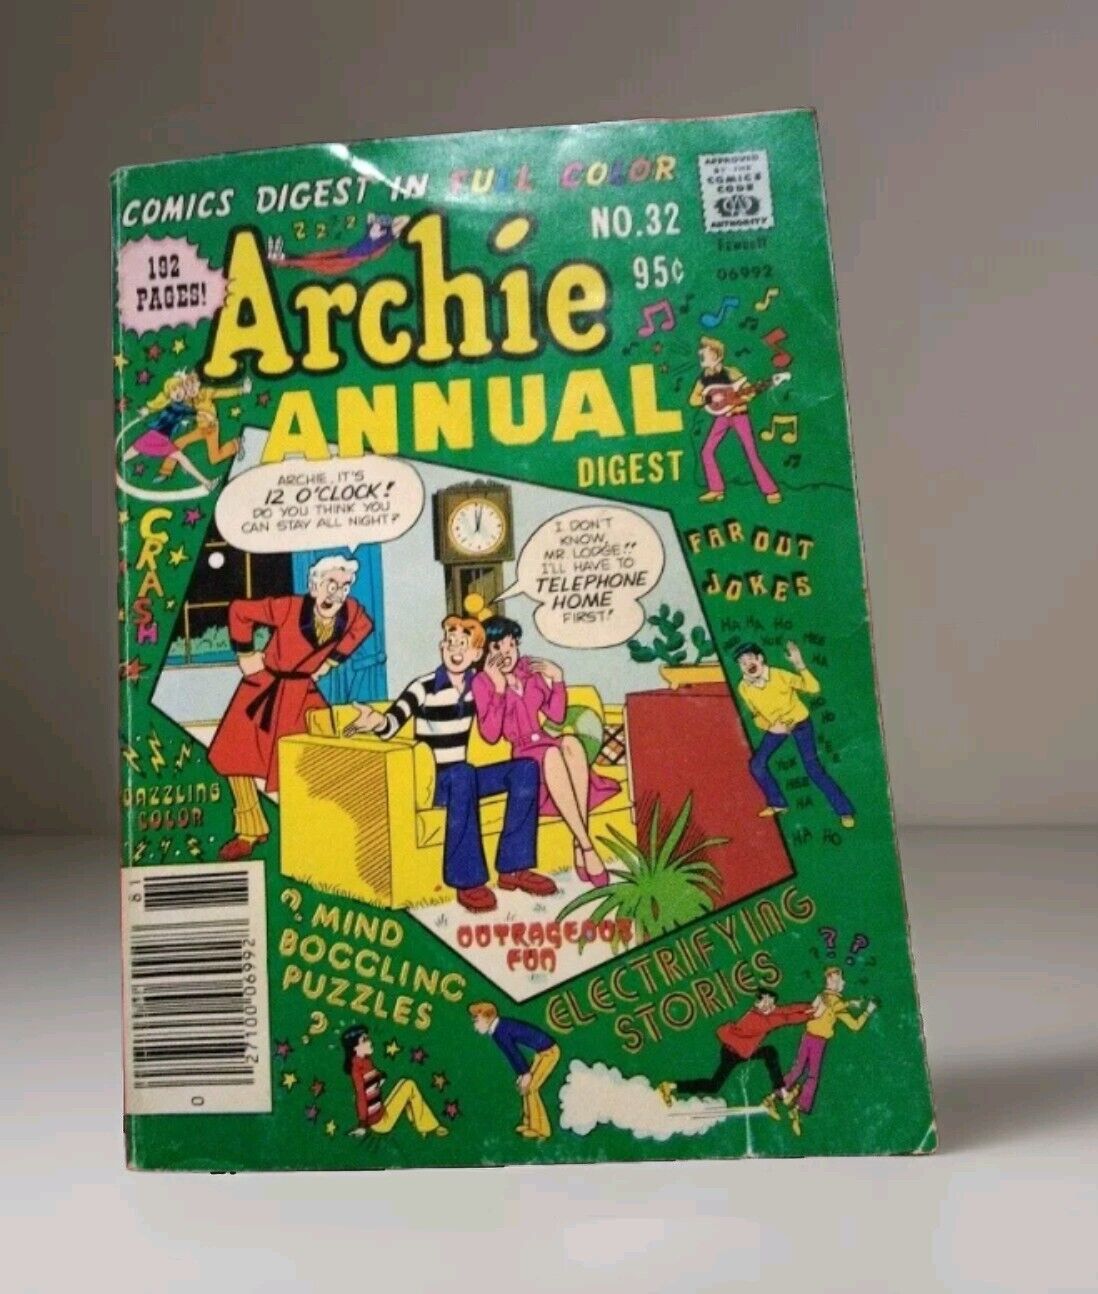 comic digest archie annual #32